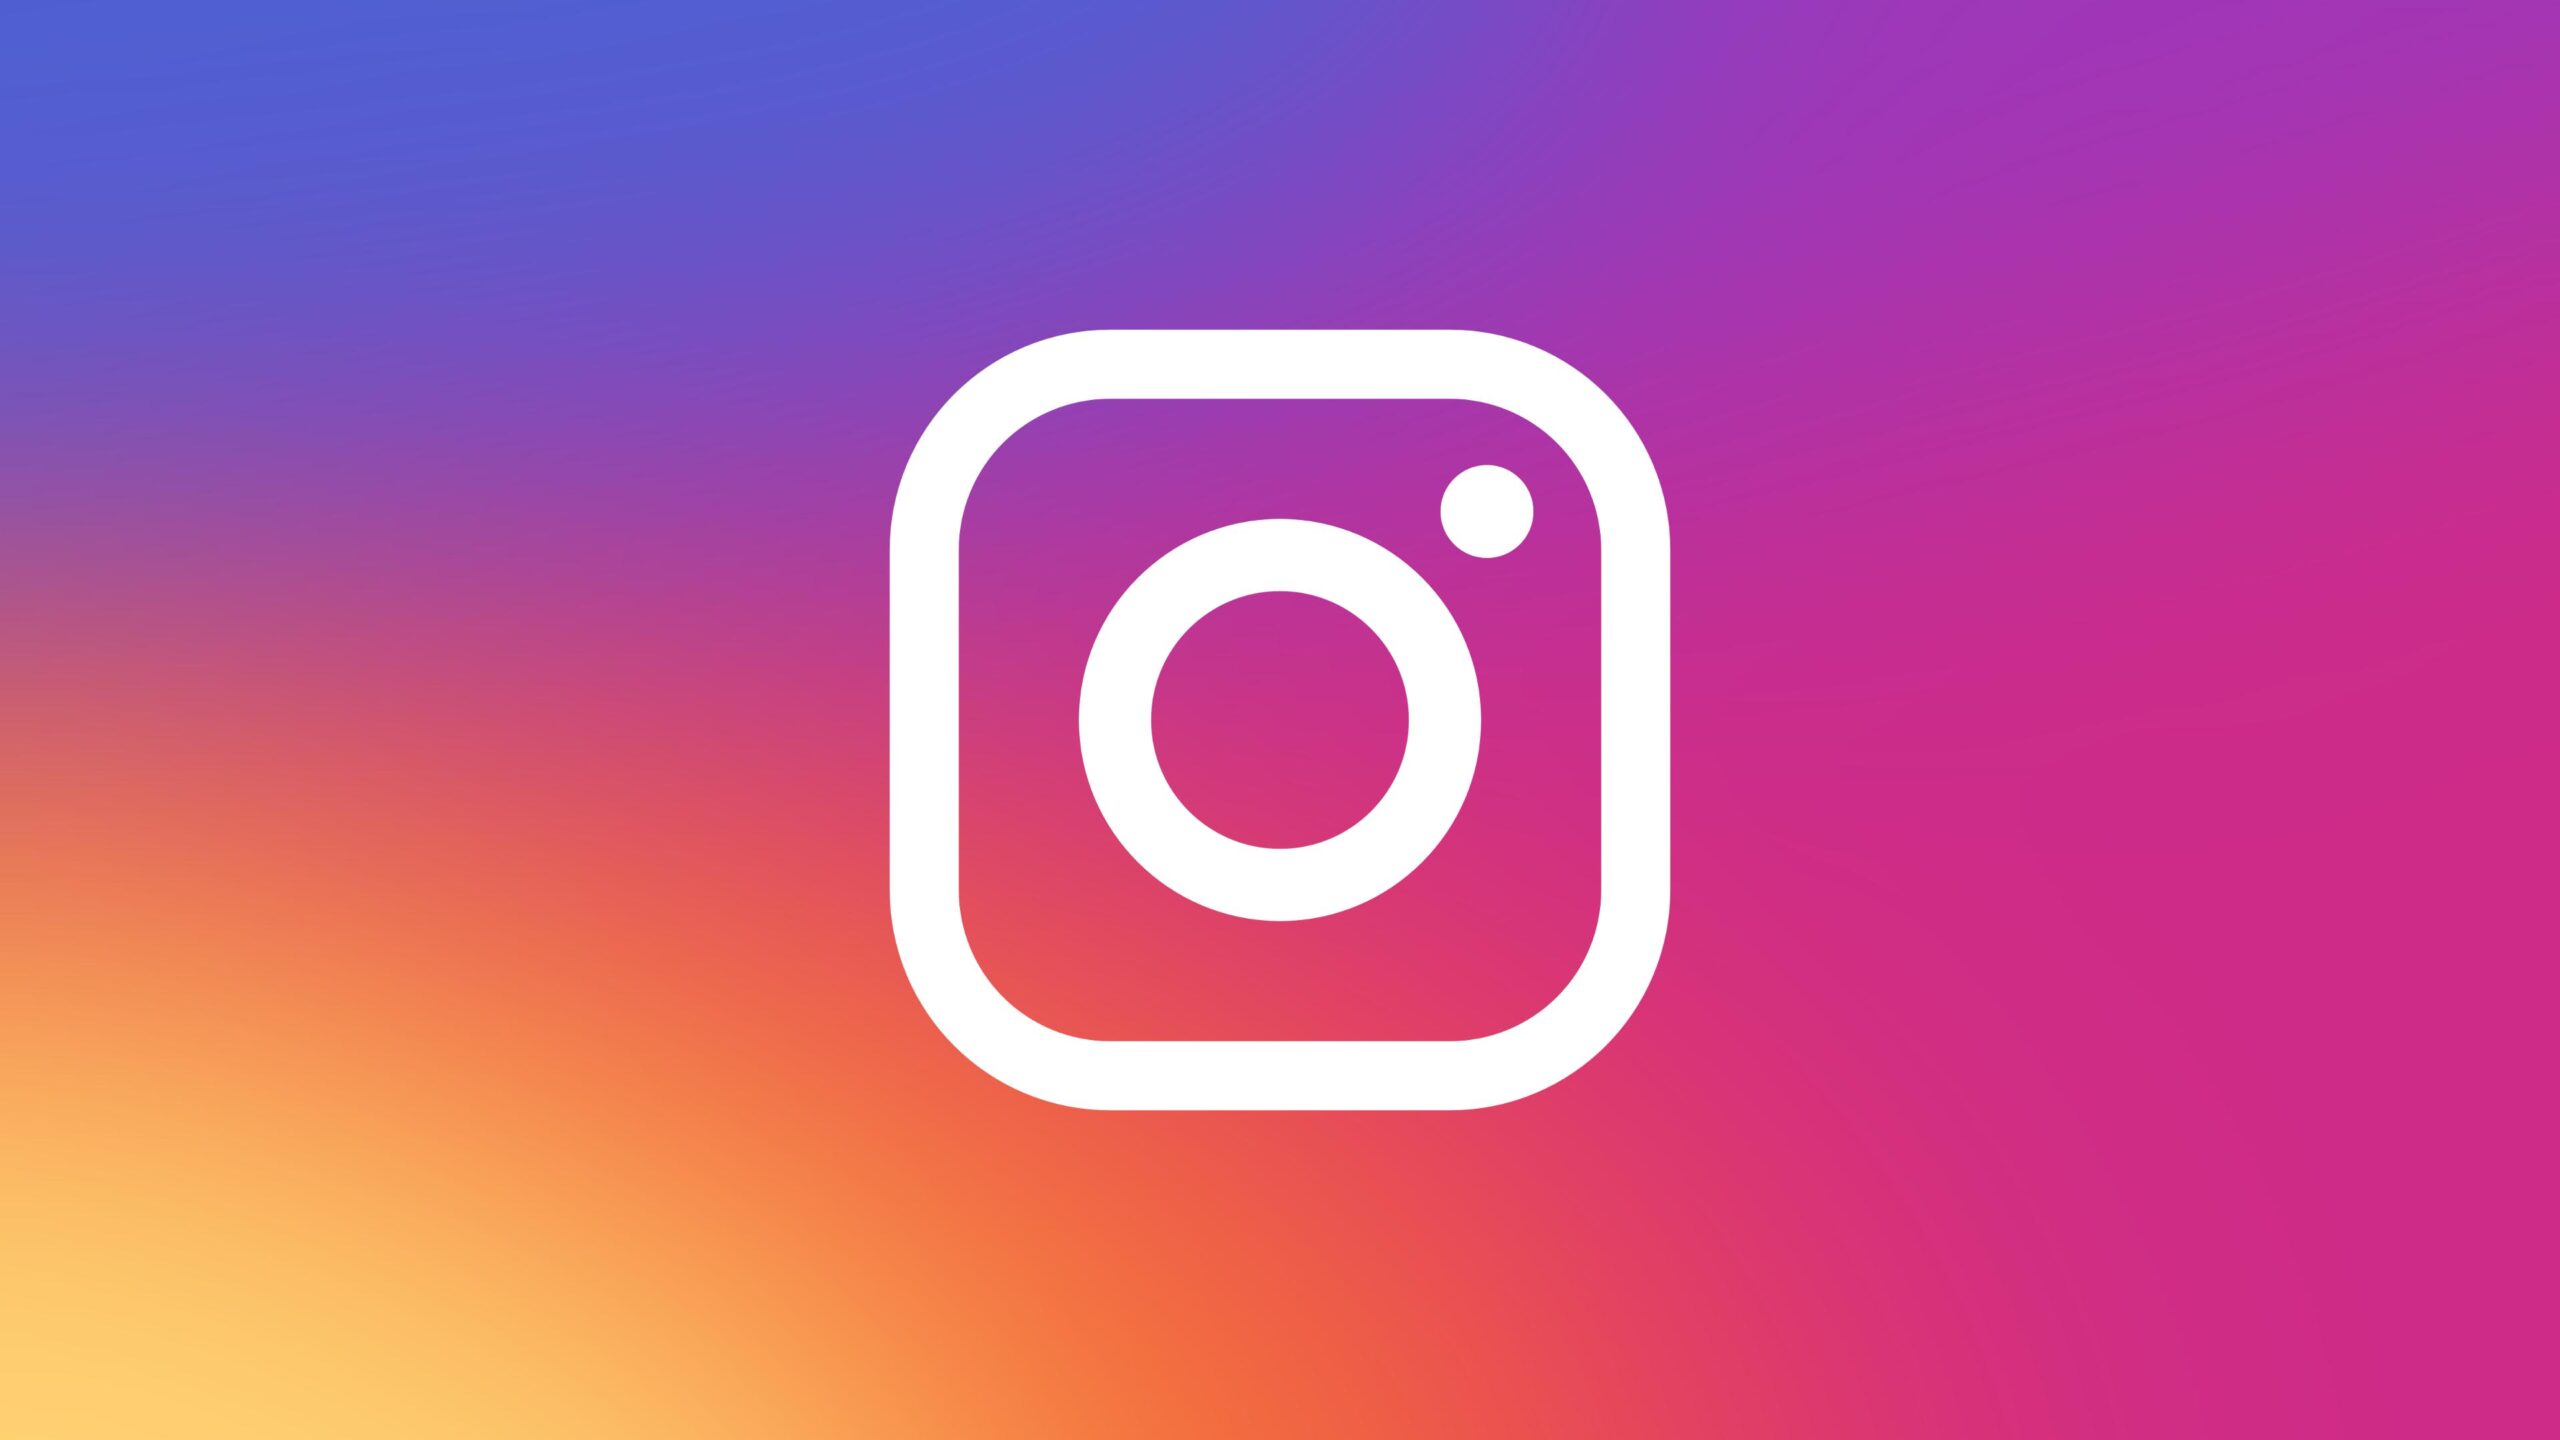 Instagram k, 2K Logo, k Wallpapers, Wallpaper, Backgrounds